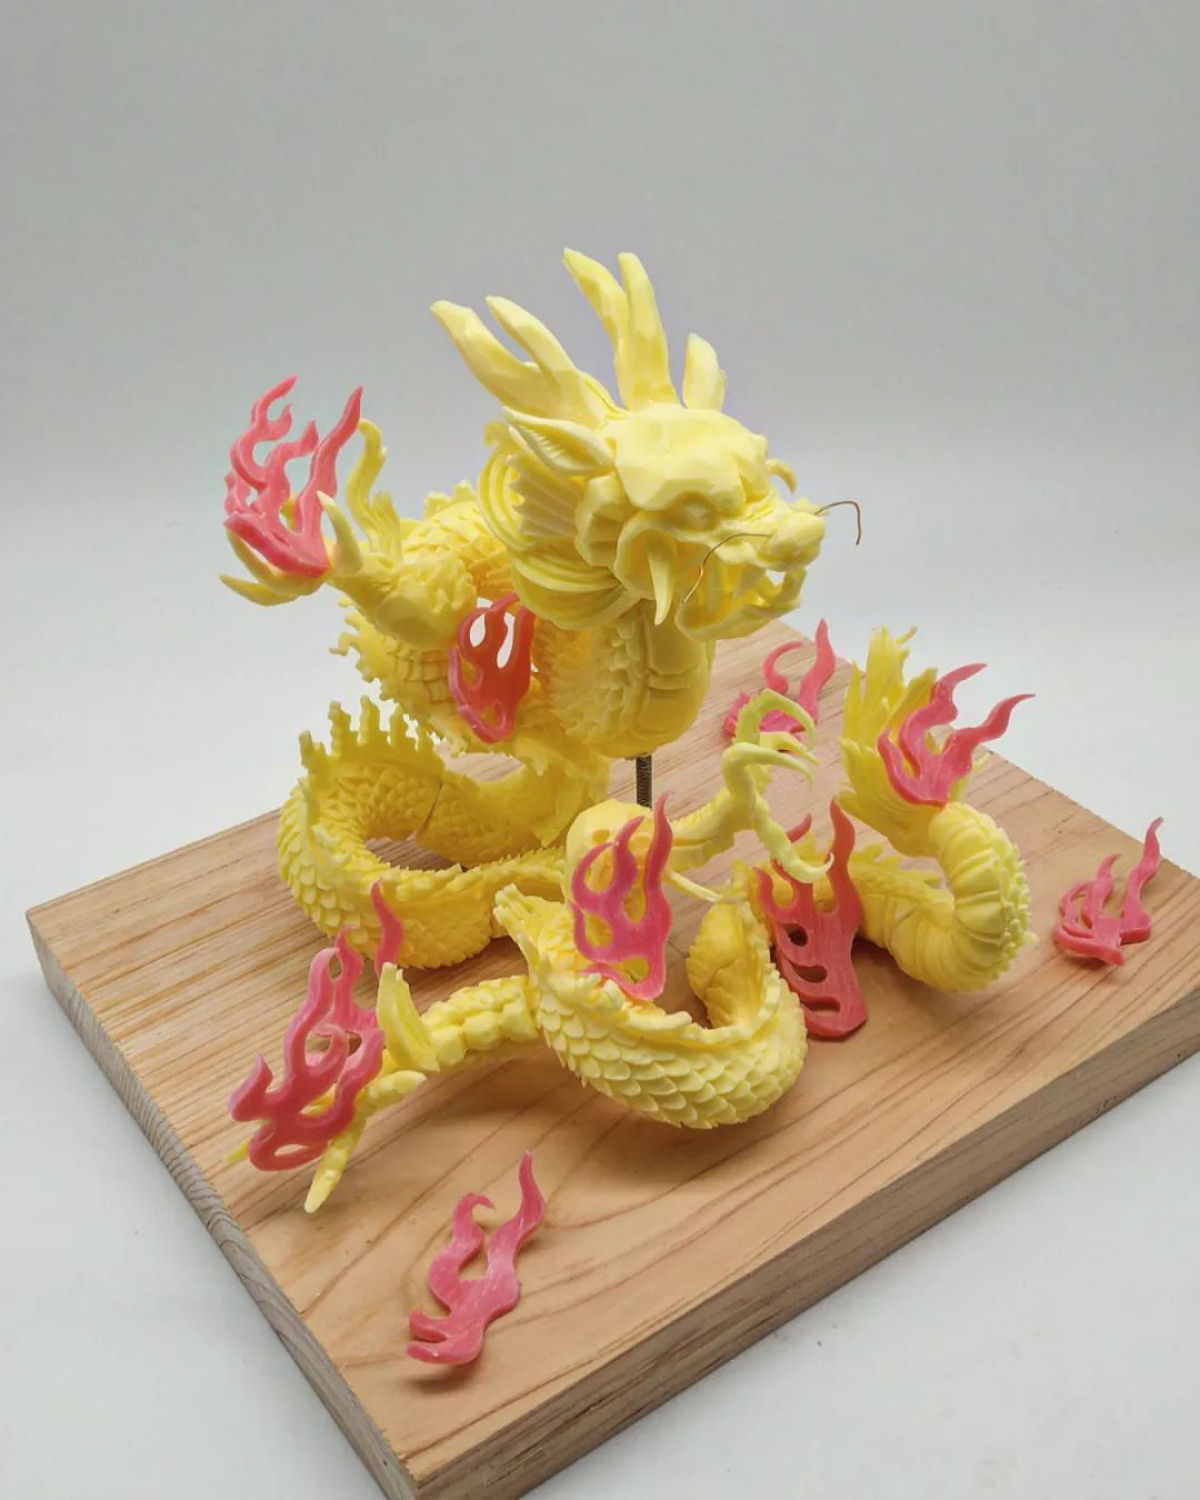 Escultor japons transforma frutas e legumes  em esculturas comestveis brilhantes 04